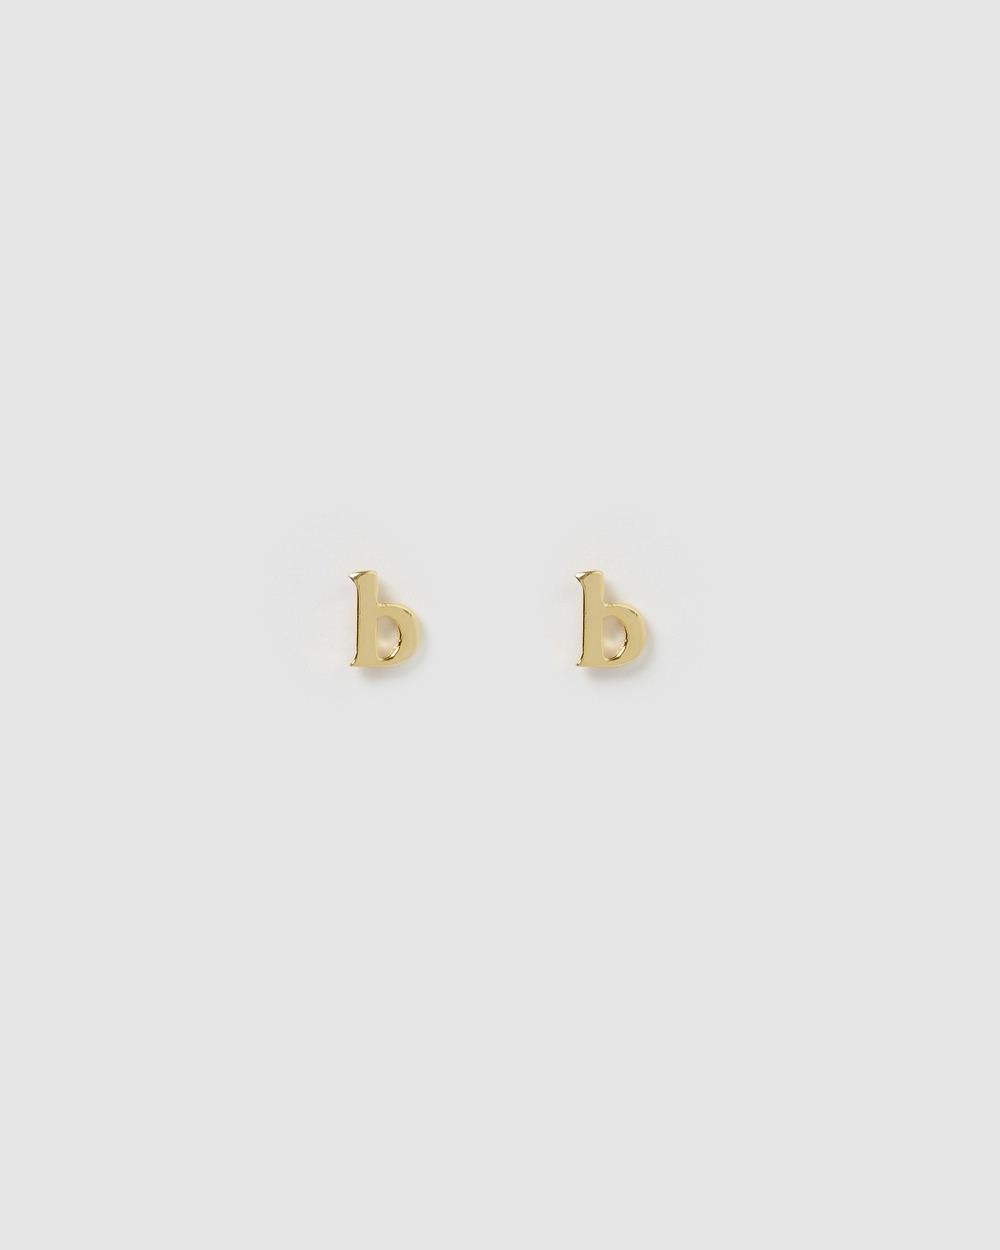 Izoa - Little Letter B Stud - Jewellery (Gold) Little Letter B Stud